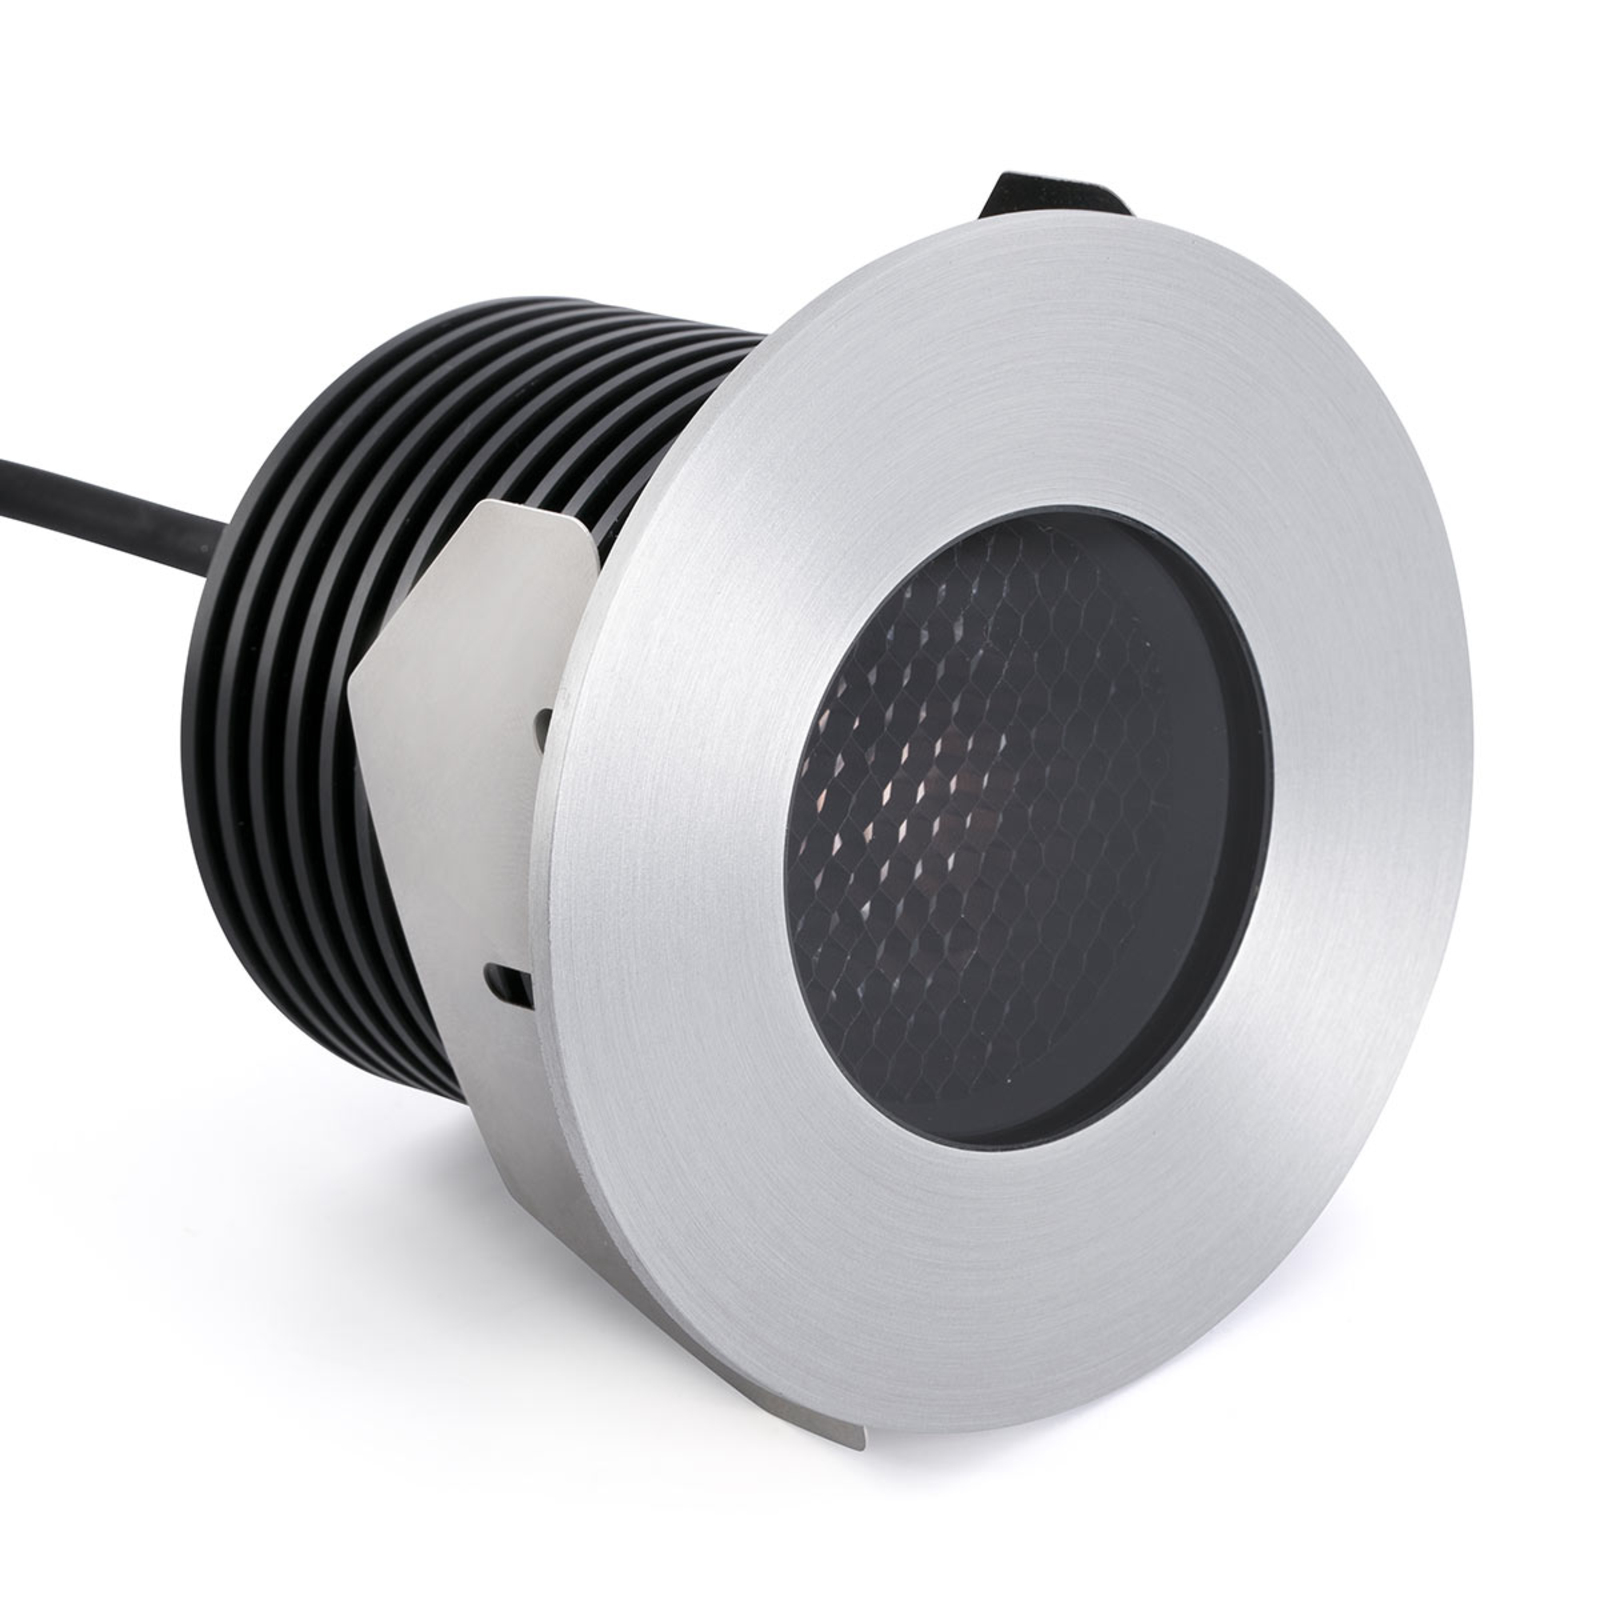 Seawater-resistant Grund LED downlight Ø 9 cm